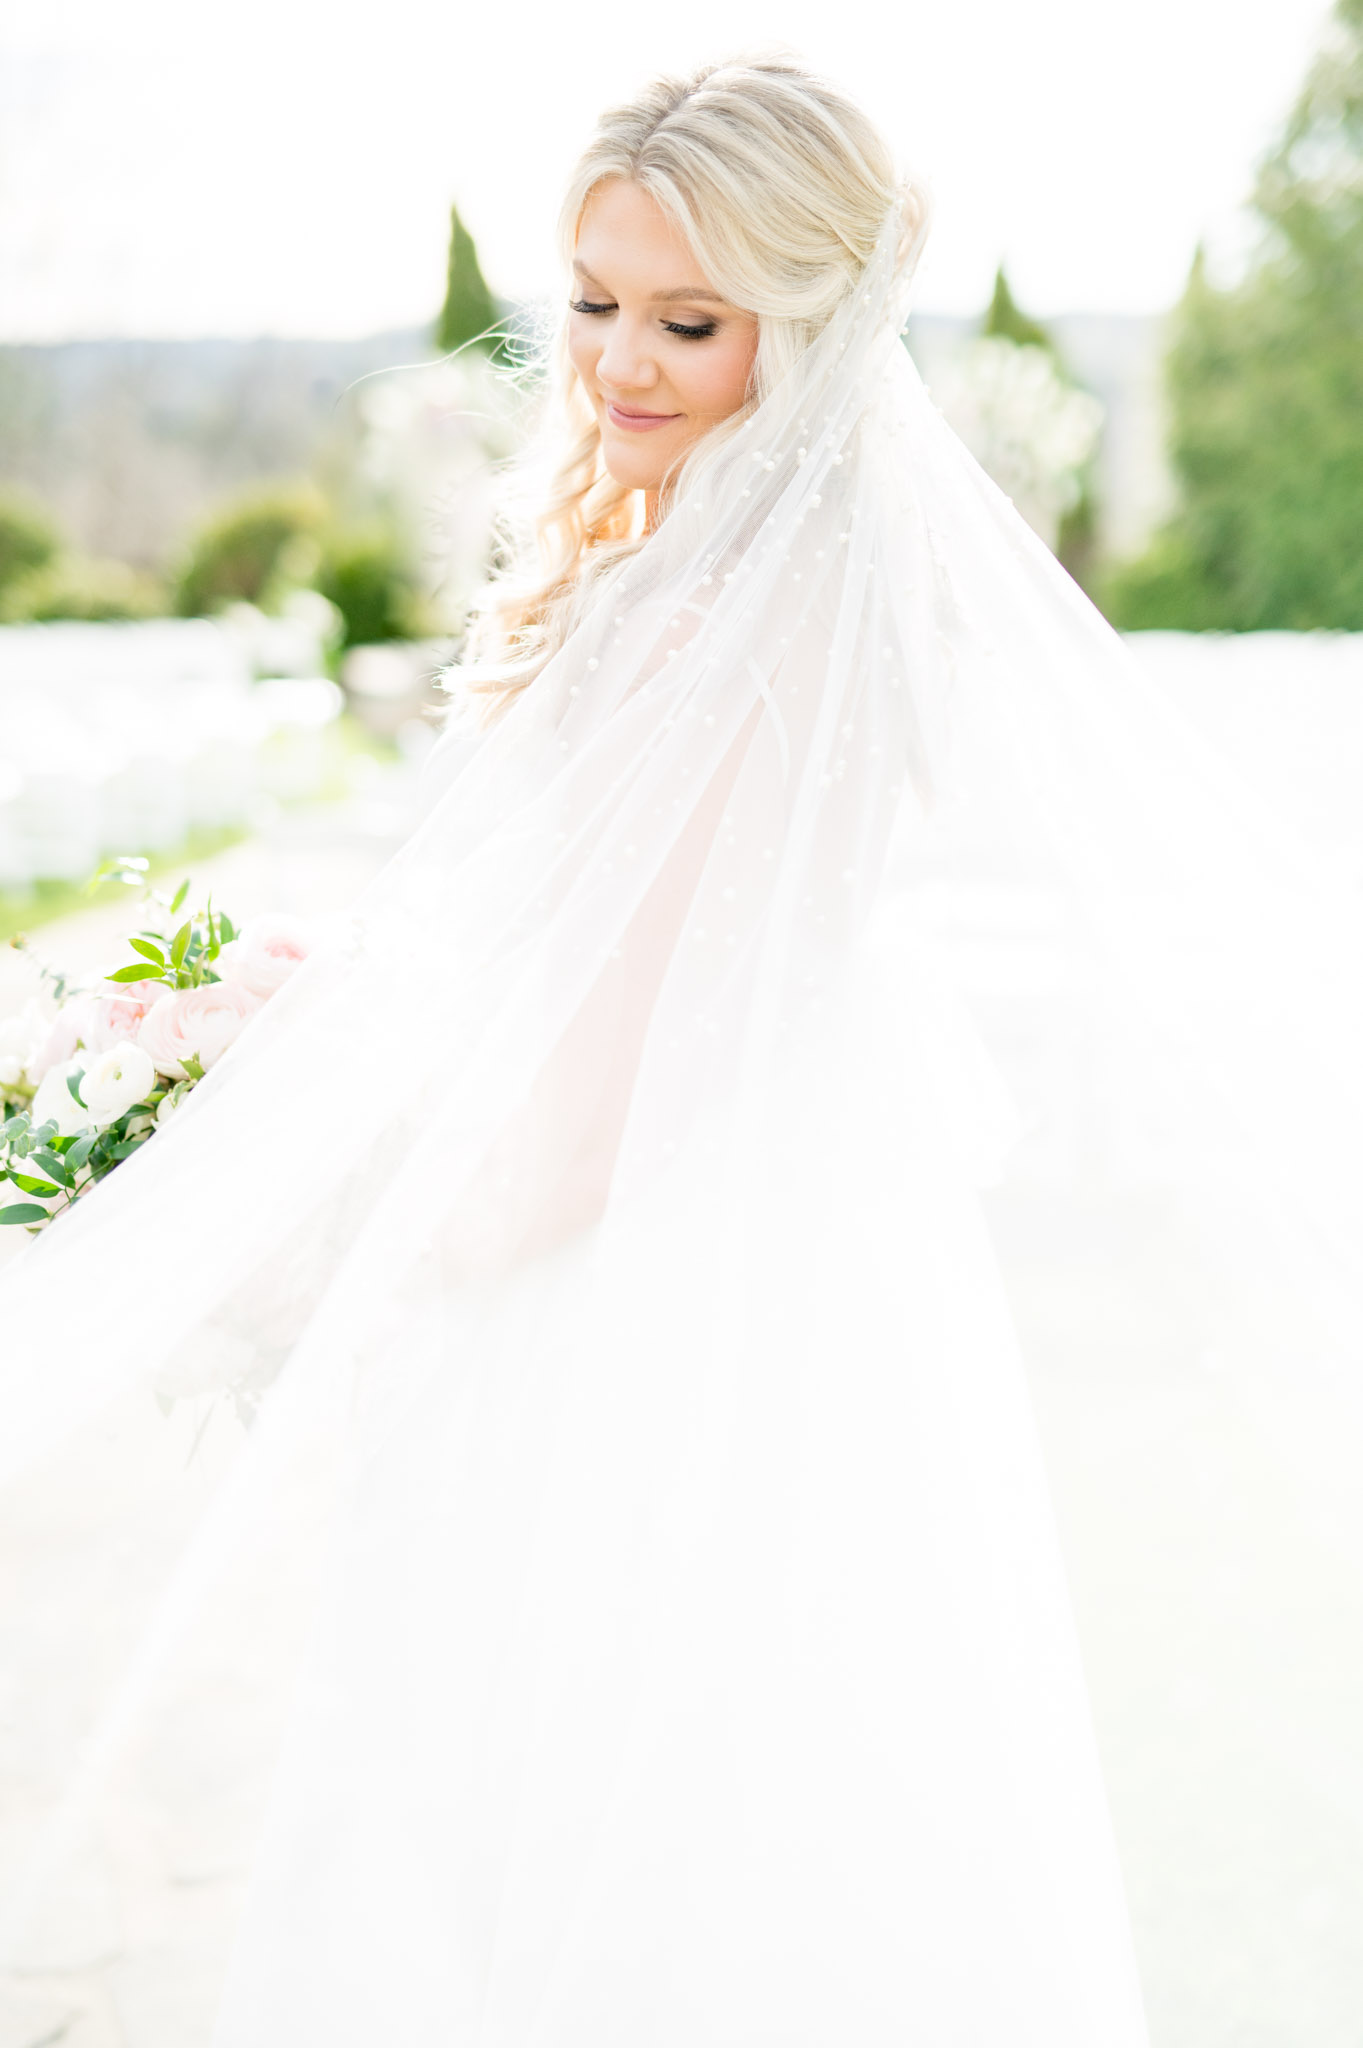 Bride looks over shoulder as veil blows in wind.